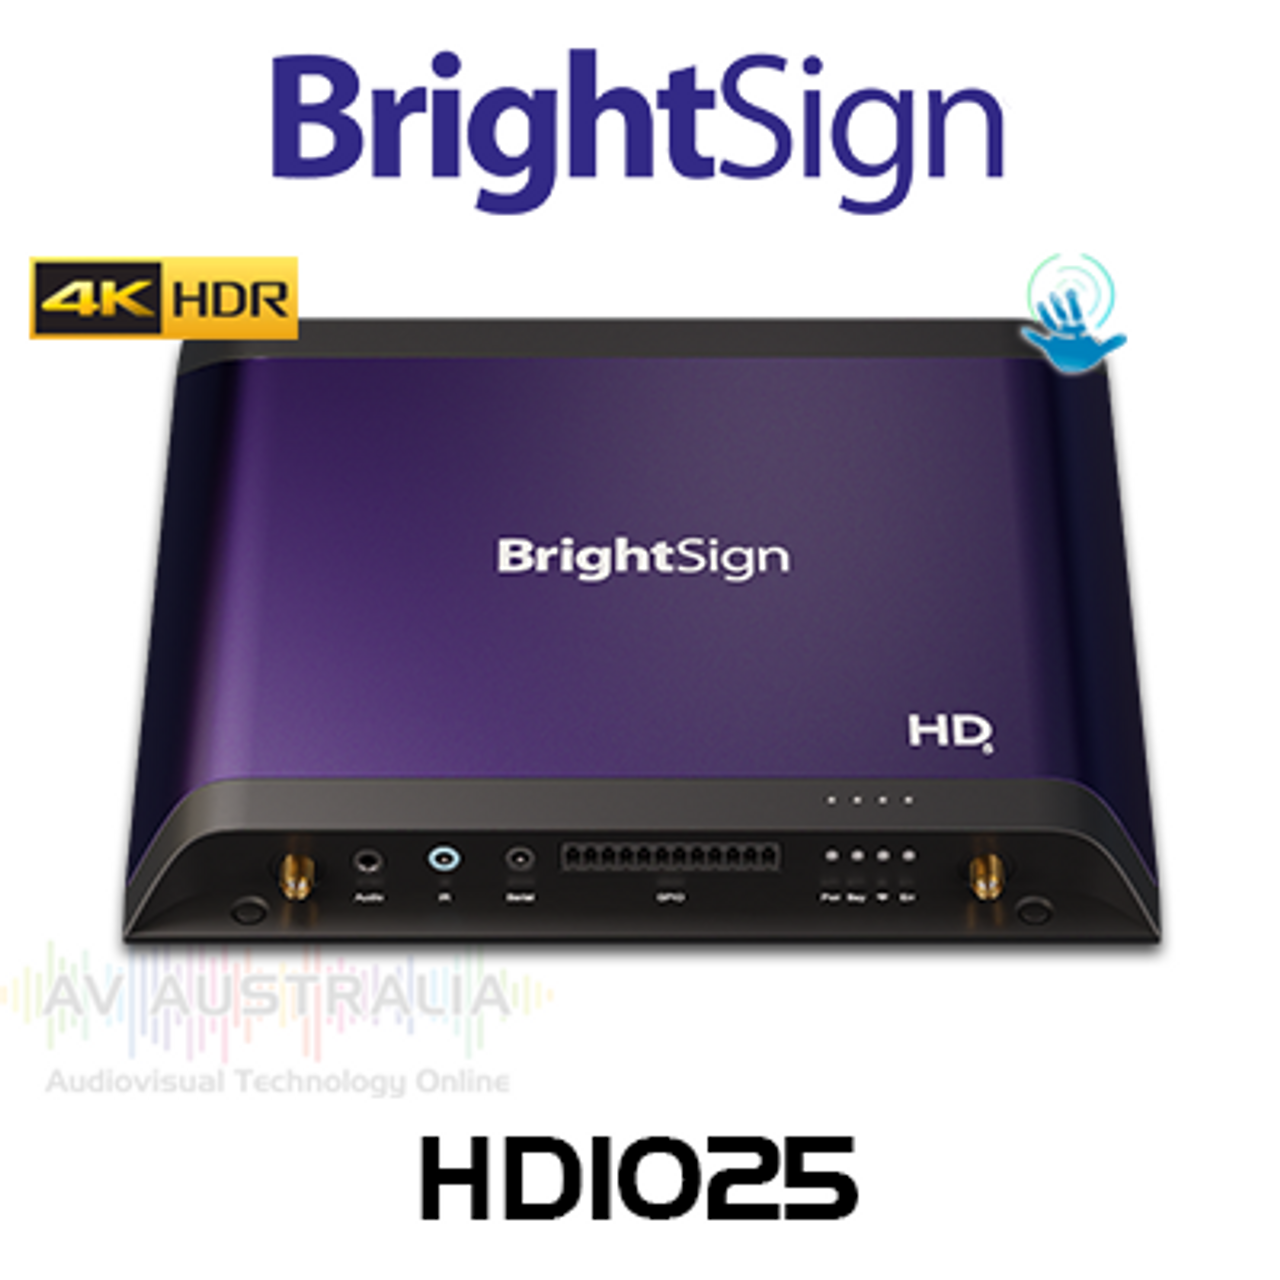 BrightSign HD1025 Mainstream 4K H.265 HTML5 Interactive Digital Signage Player